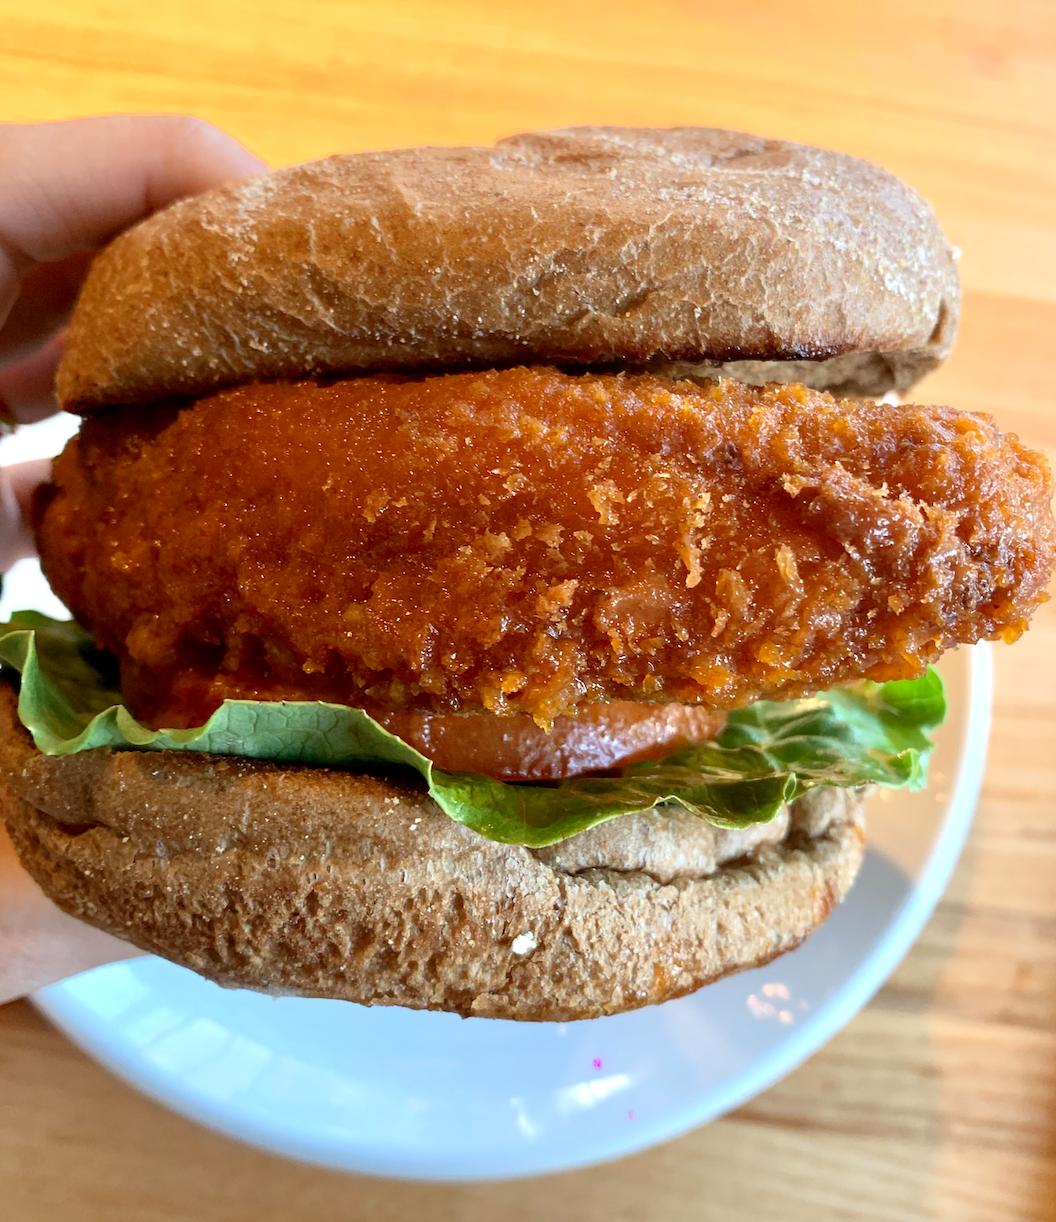 buffalo "chicken" sandwich made with seitan, a popular vegan protein source